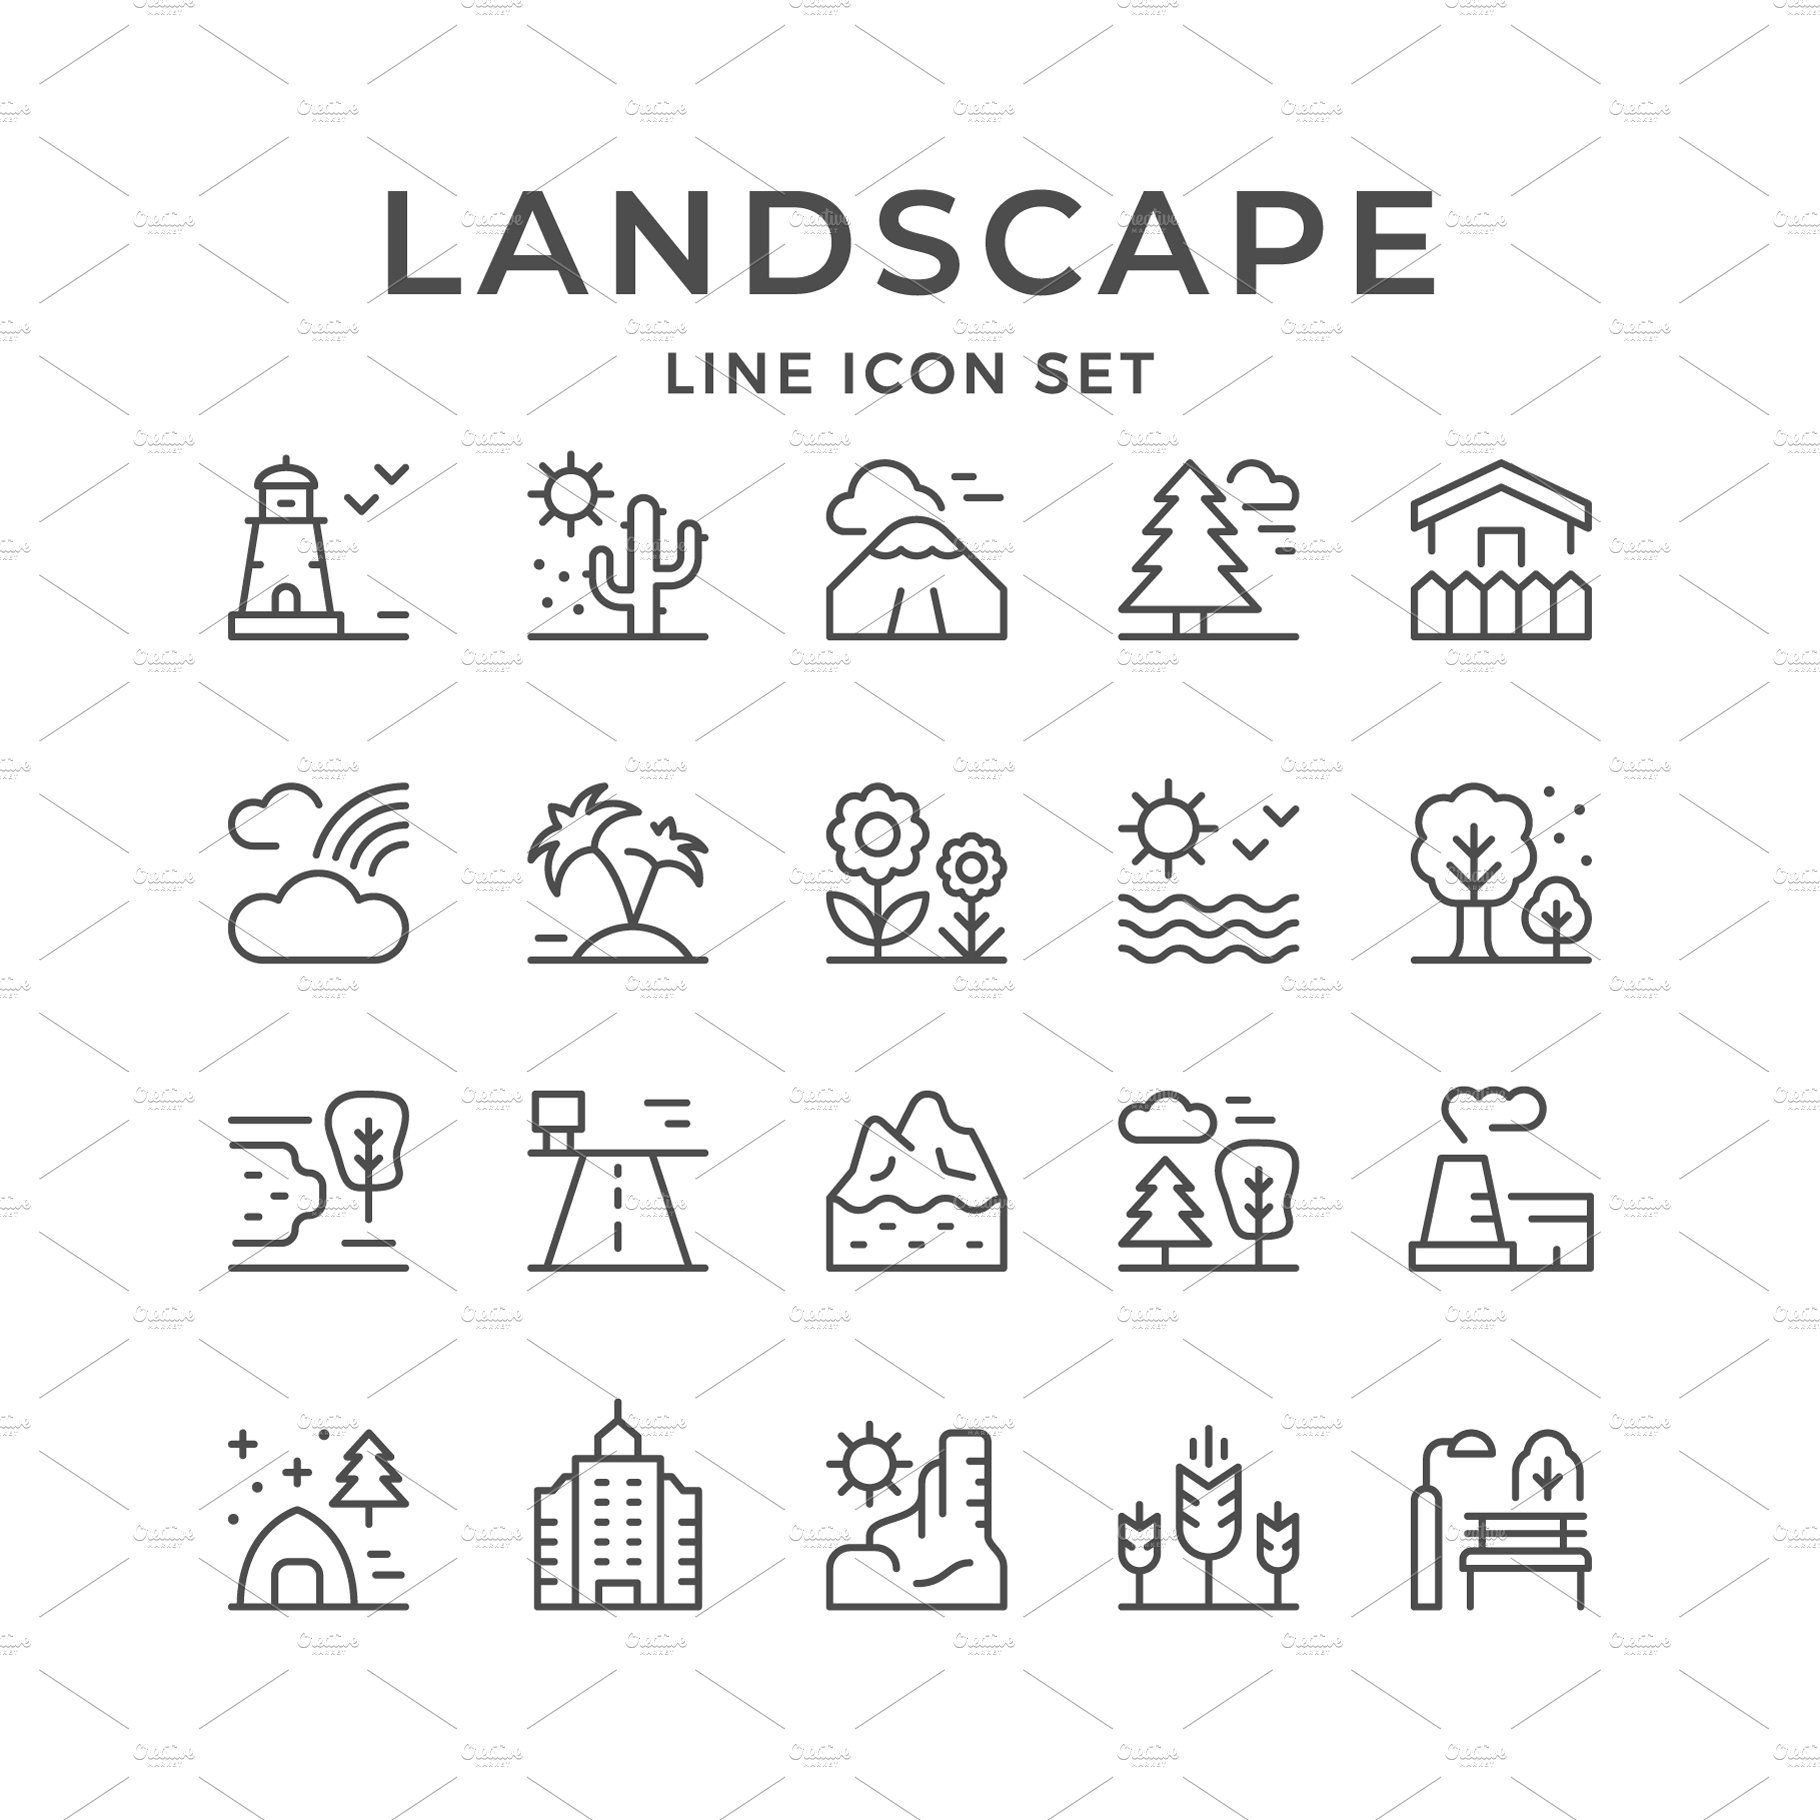 Set line icons of landscape cover image.